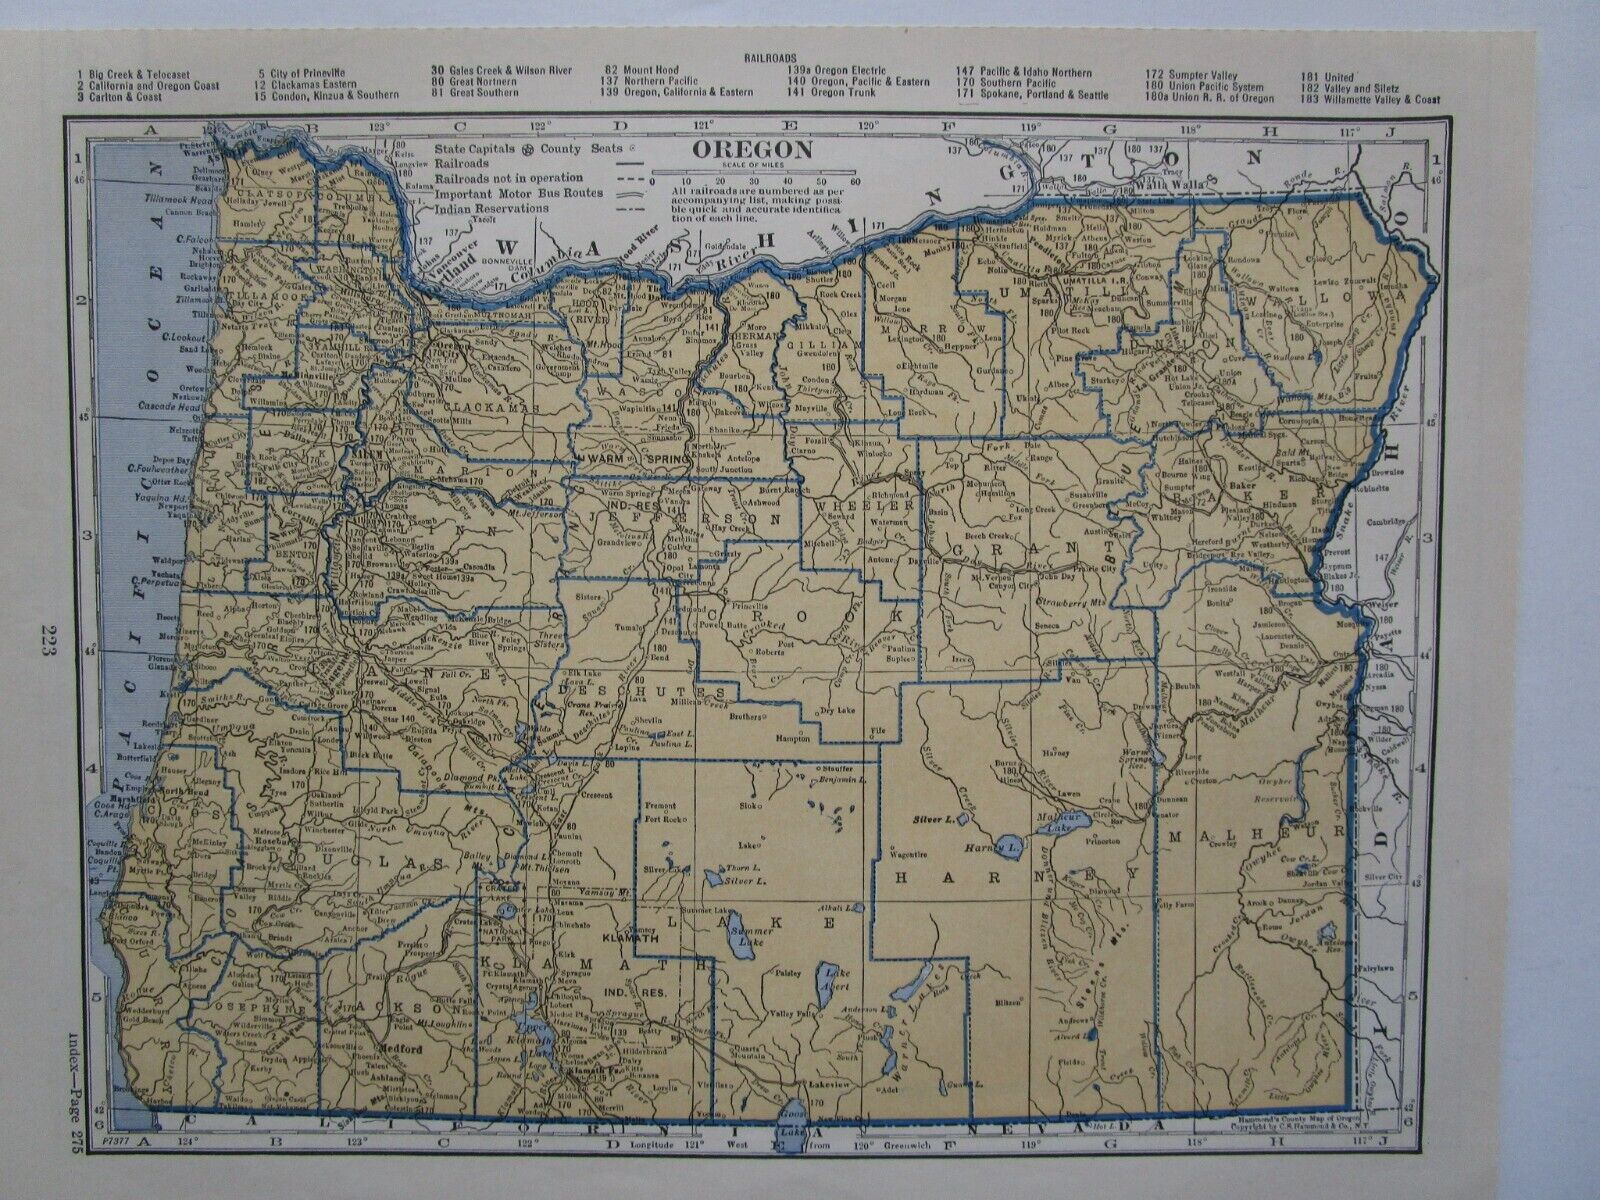 OR 1937 OREGON RAILROAD Map. GALES CREEK & WILSON RIVER RR, CLACKAMAS EASTERN RR